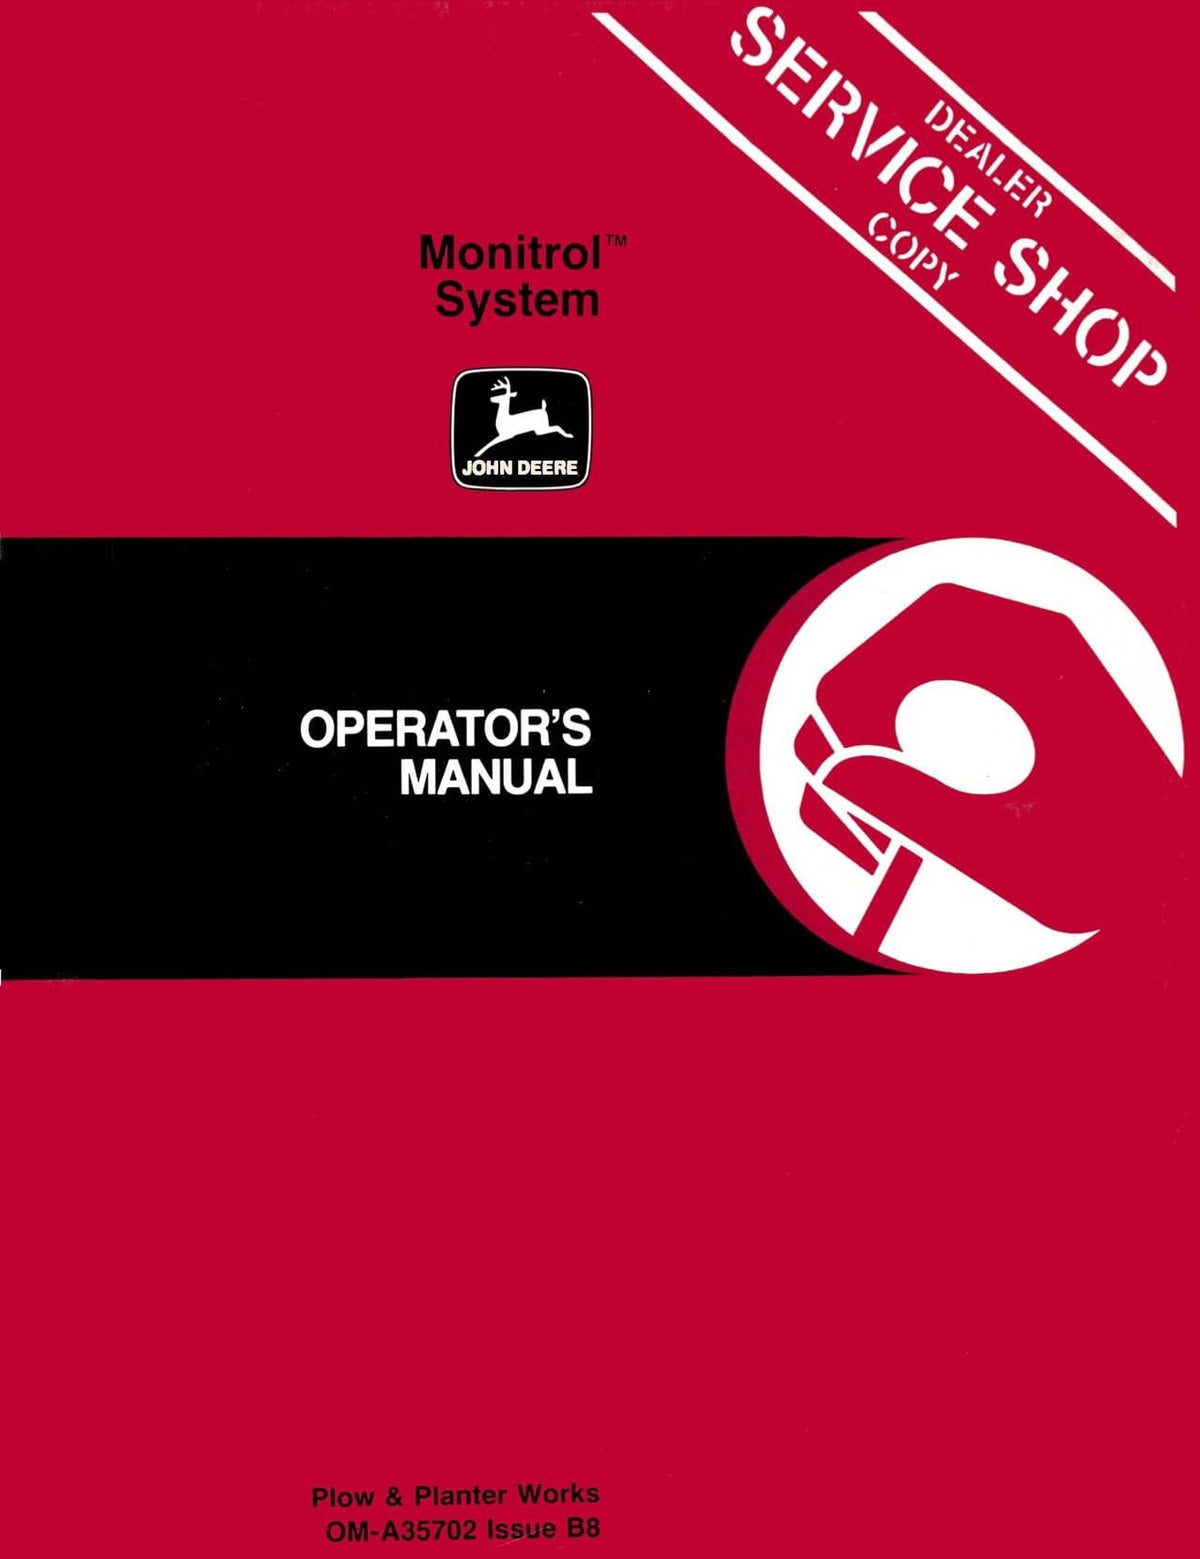 John Deere Monitrol System Plow and Planter - Operator's Manual - Ag Manuals - A Provider of Digital Farm Manuals - 1